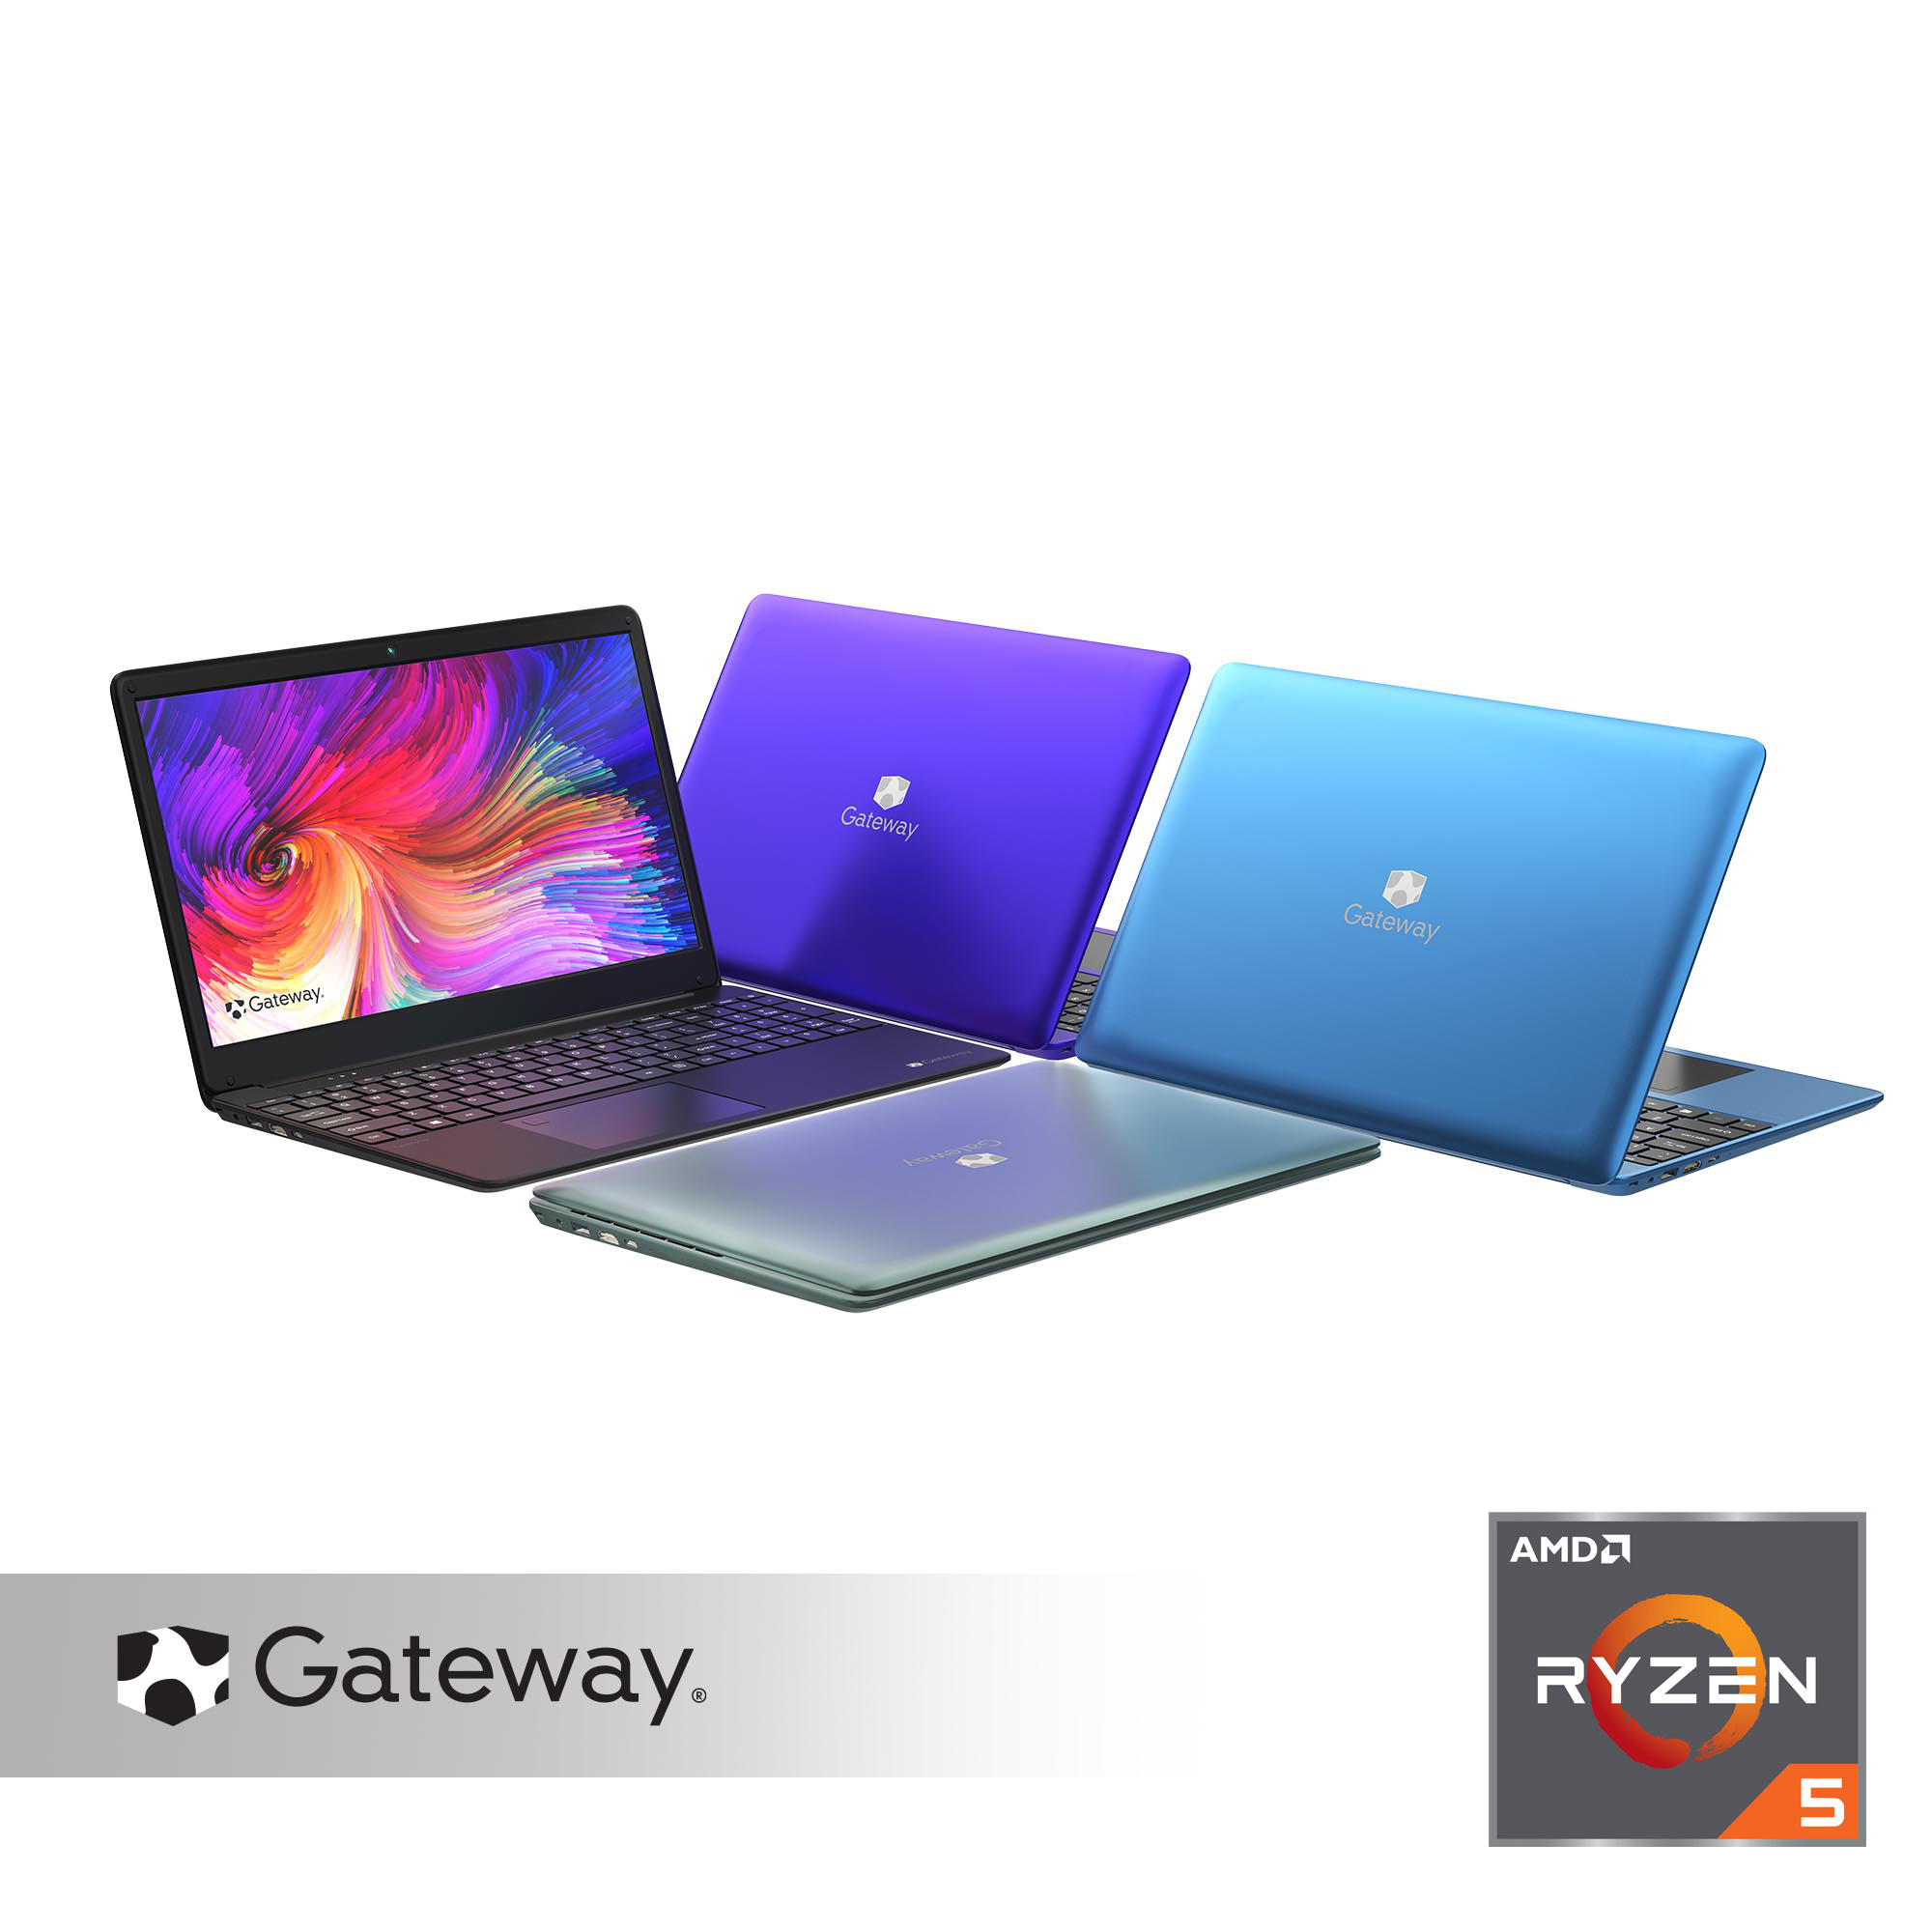 Gateway 15.6" FHD Ultra-Slim Notebook AMD Ryzen 5 3450U 8GB RAM 256GB SSD-Tuned-THX-Audio Fingerprint-Scanner 1MP Webcam HDMI Cortana Windows-10Home $379.00 at Walmart